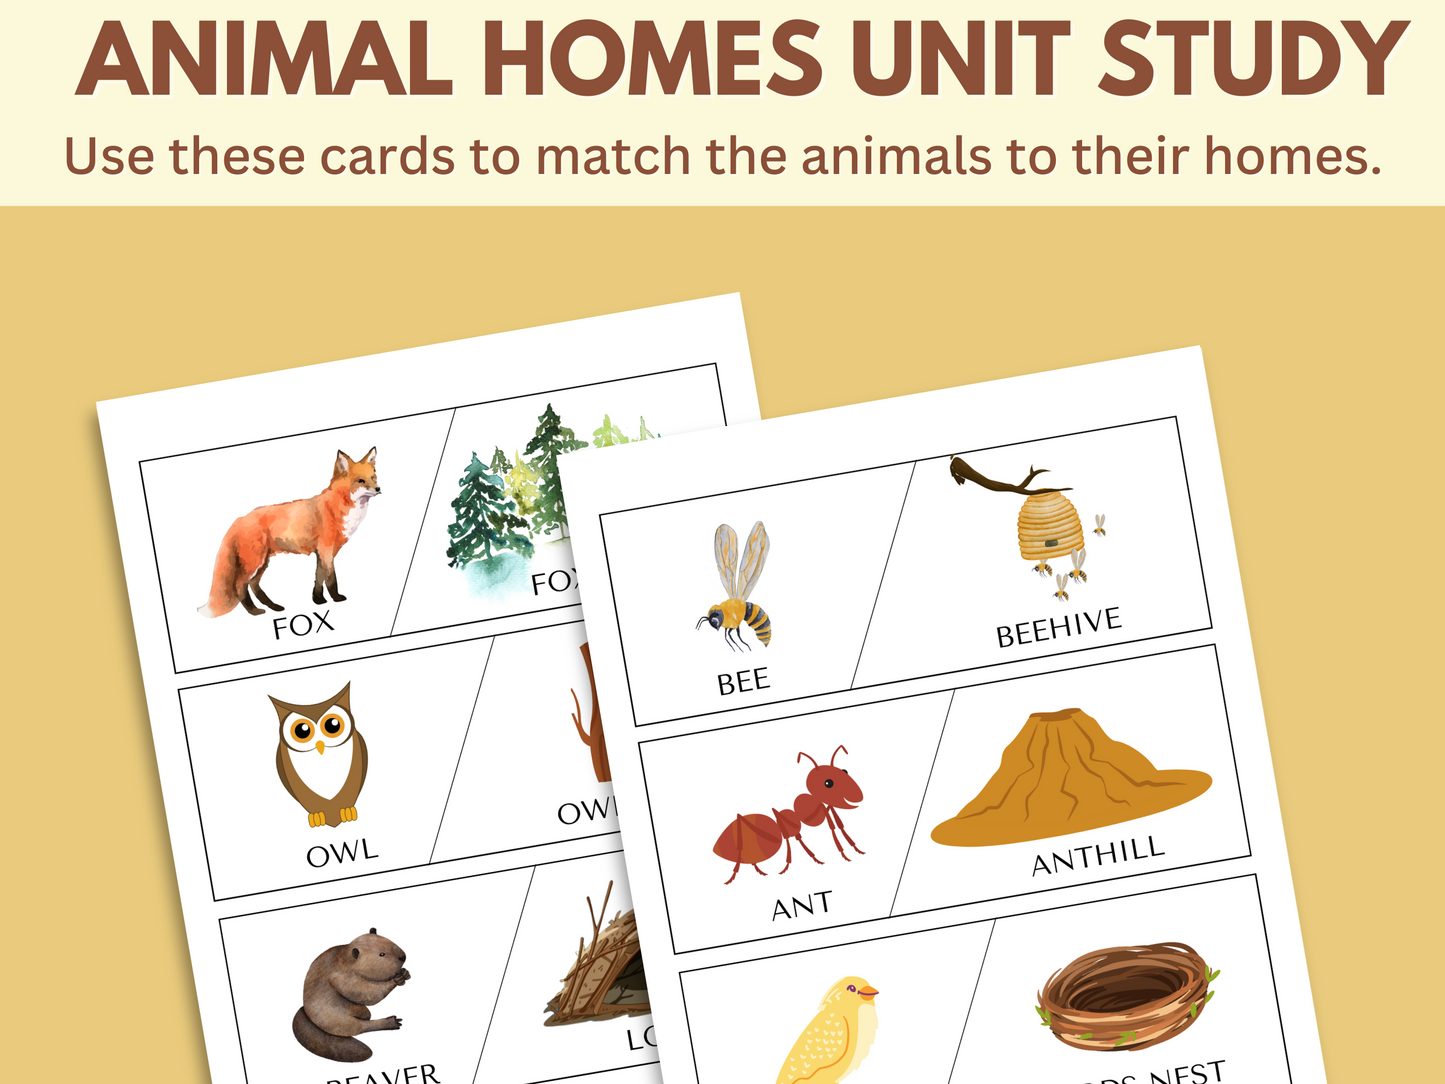 ANIMAL HOMES UNIT STUDY